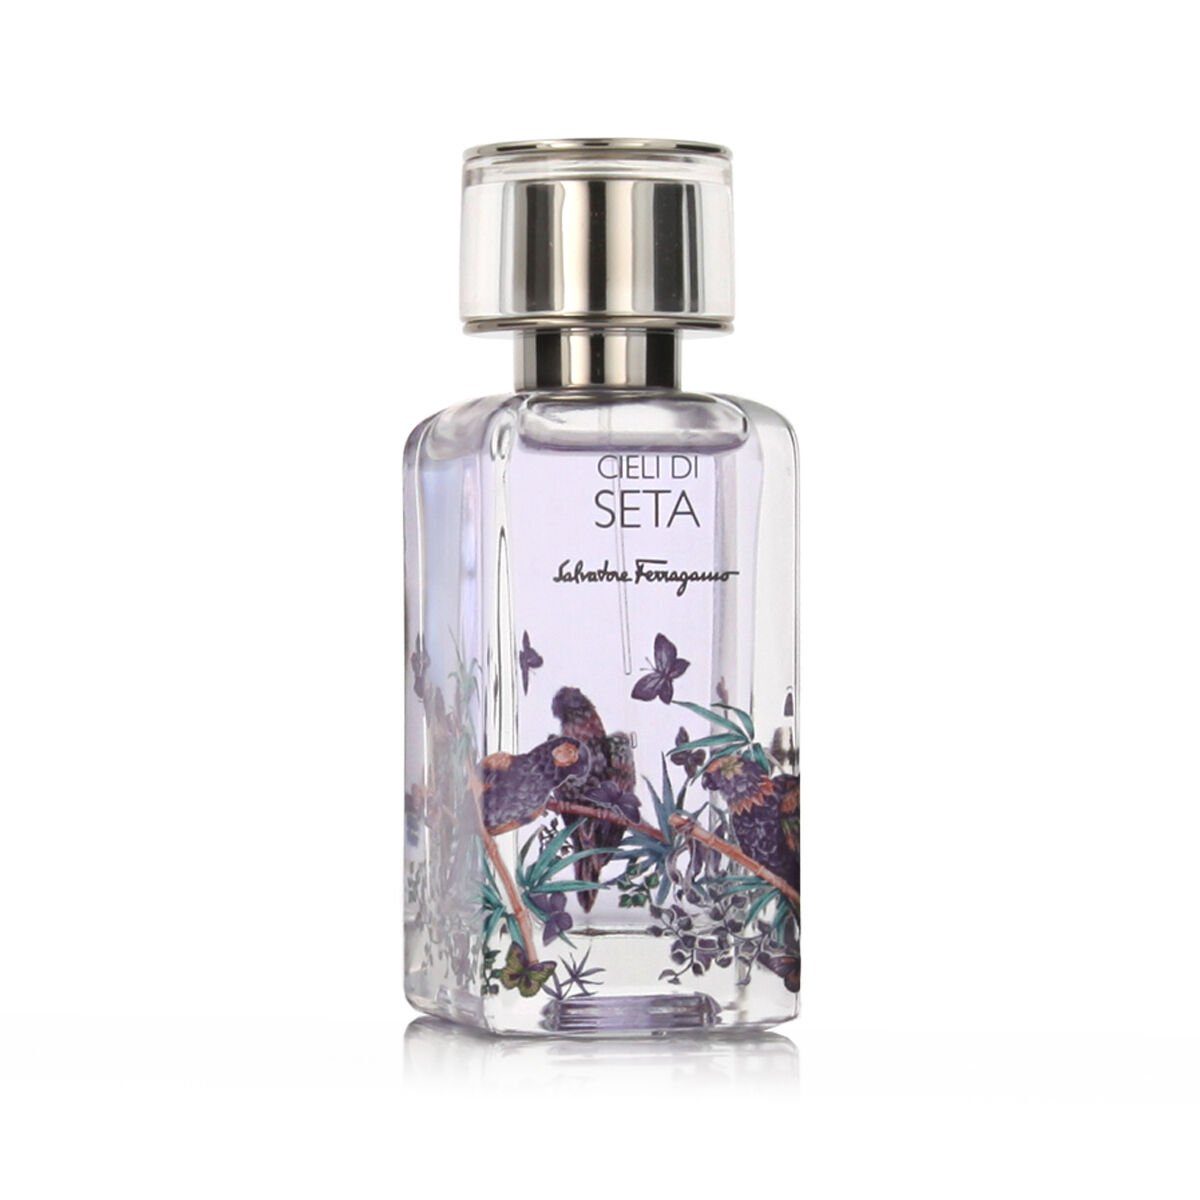 50 Unisex-Parfüm ml Parfum de de Eau Salvatore Toilette Seta Ferragamo Ferragamo Salvatore Cieli Eau di